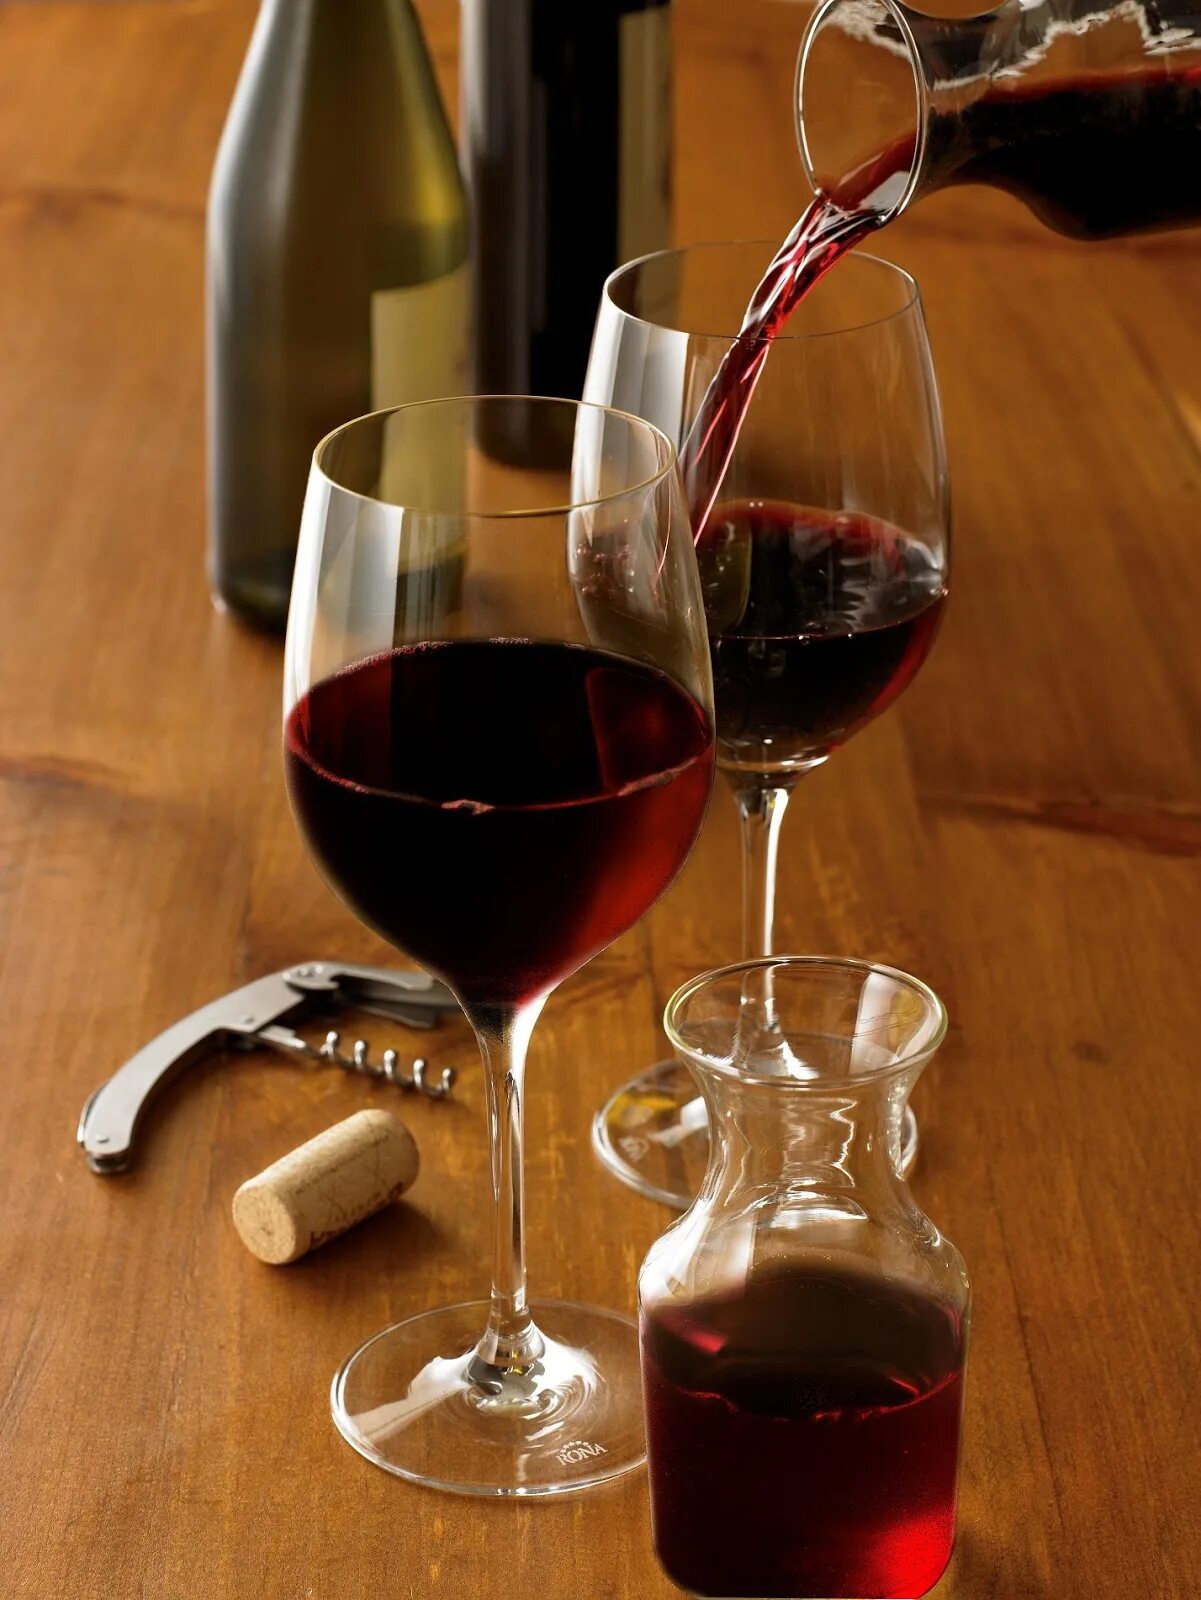 Бокал вина на столе. Бокал с вином. Два бокала с вином. Бутылка вина. Фужер с вином.